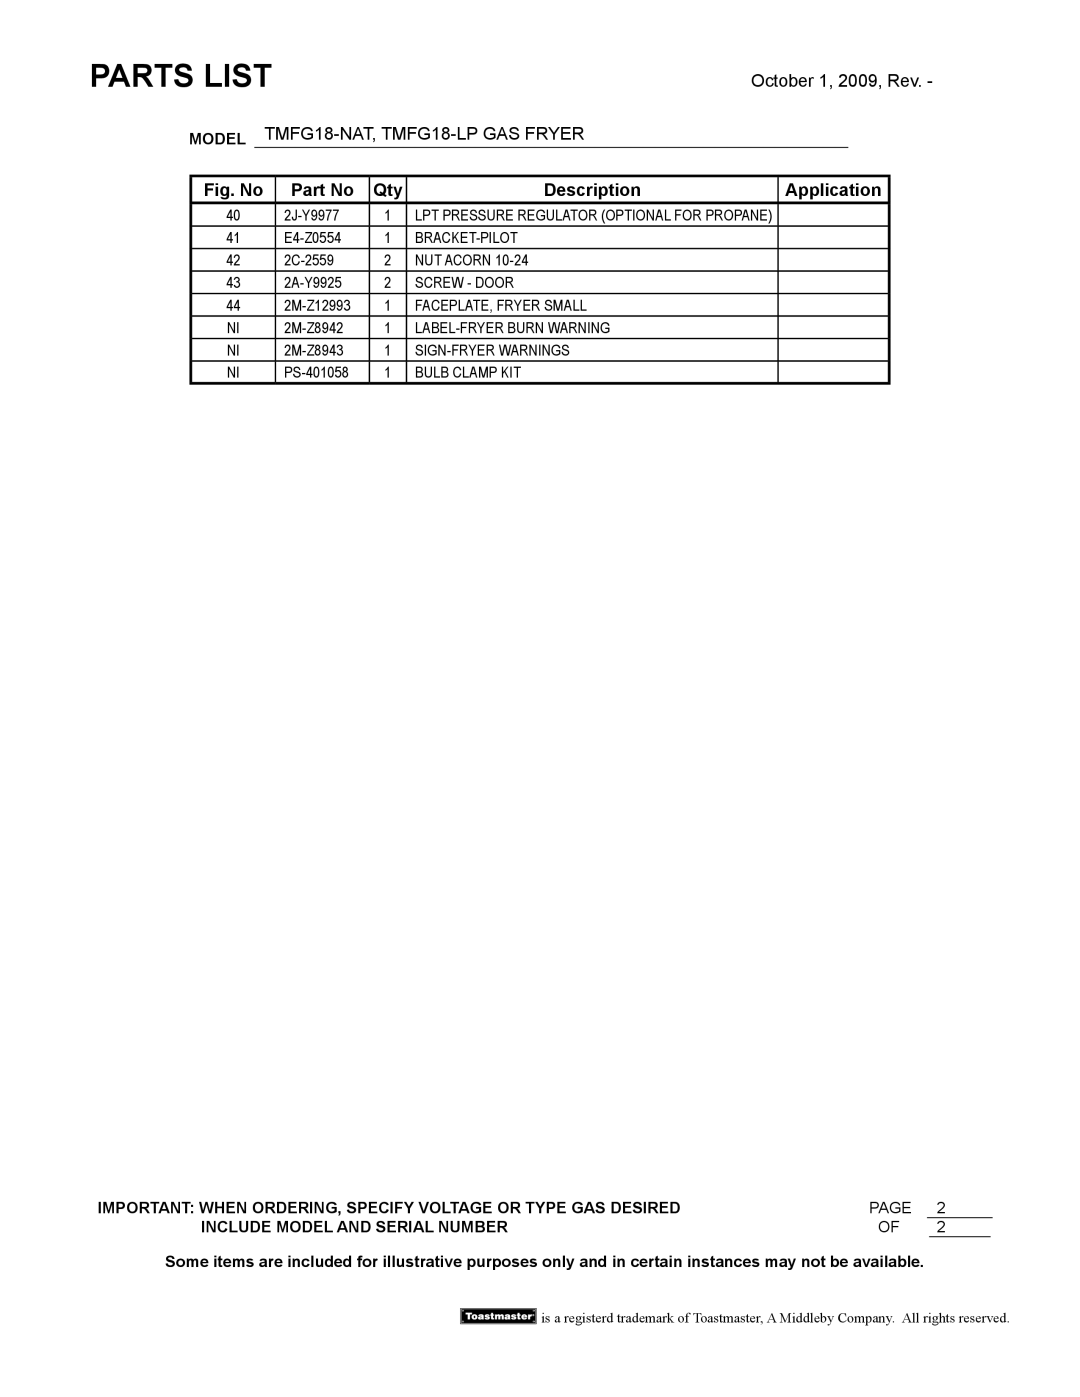 Toastmaster TMFG30-NAT, TMFG18-LP, TMFG18-NAT, TMFG30-LP manual Parts List, Fig. No, Description, Application 